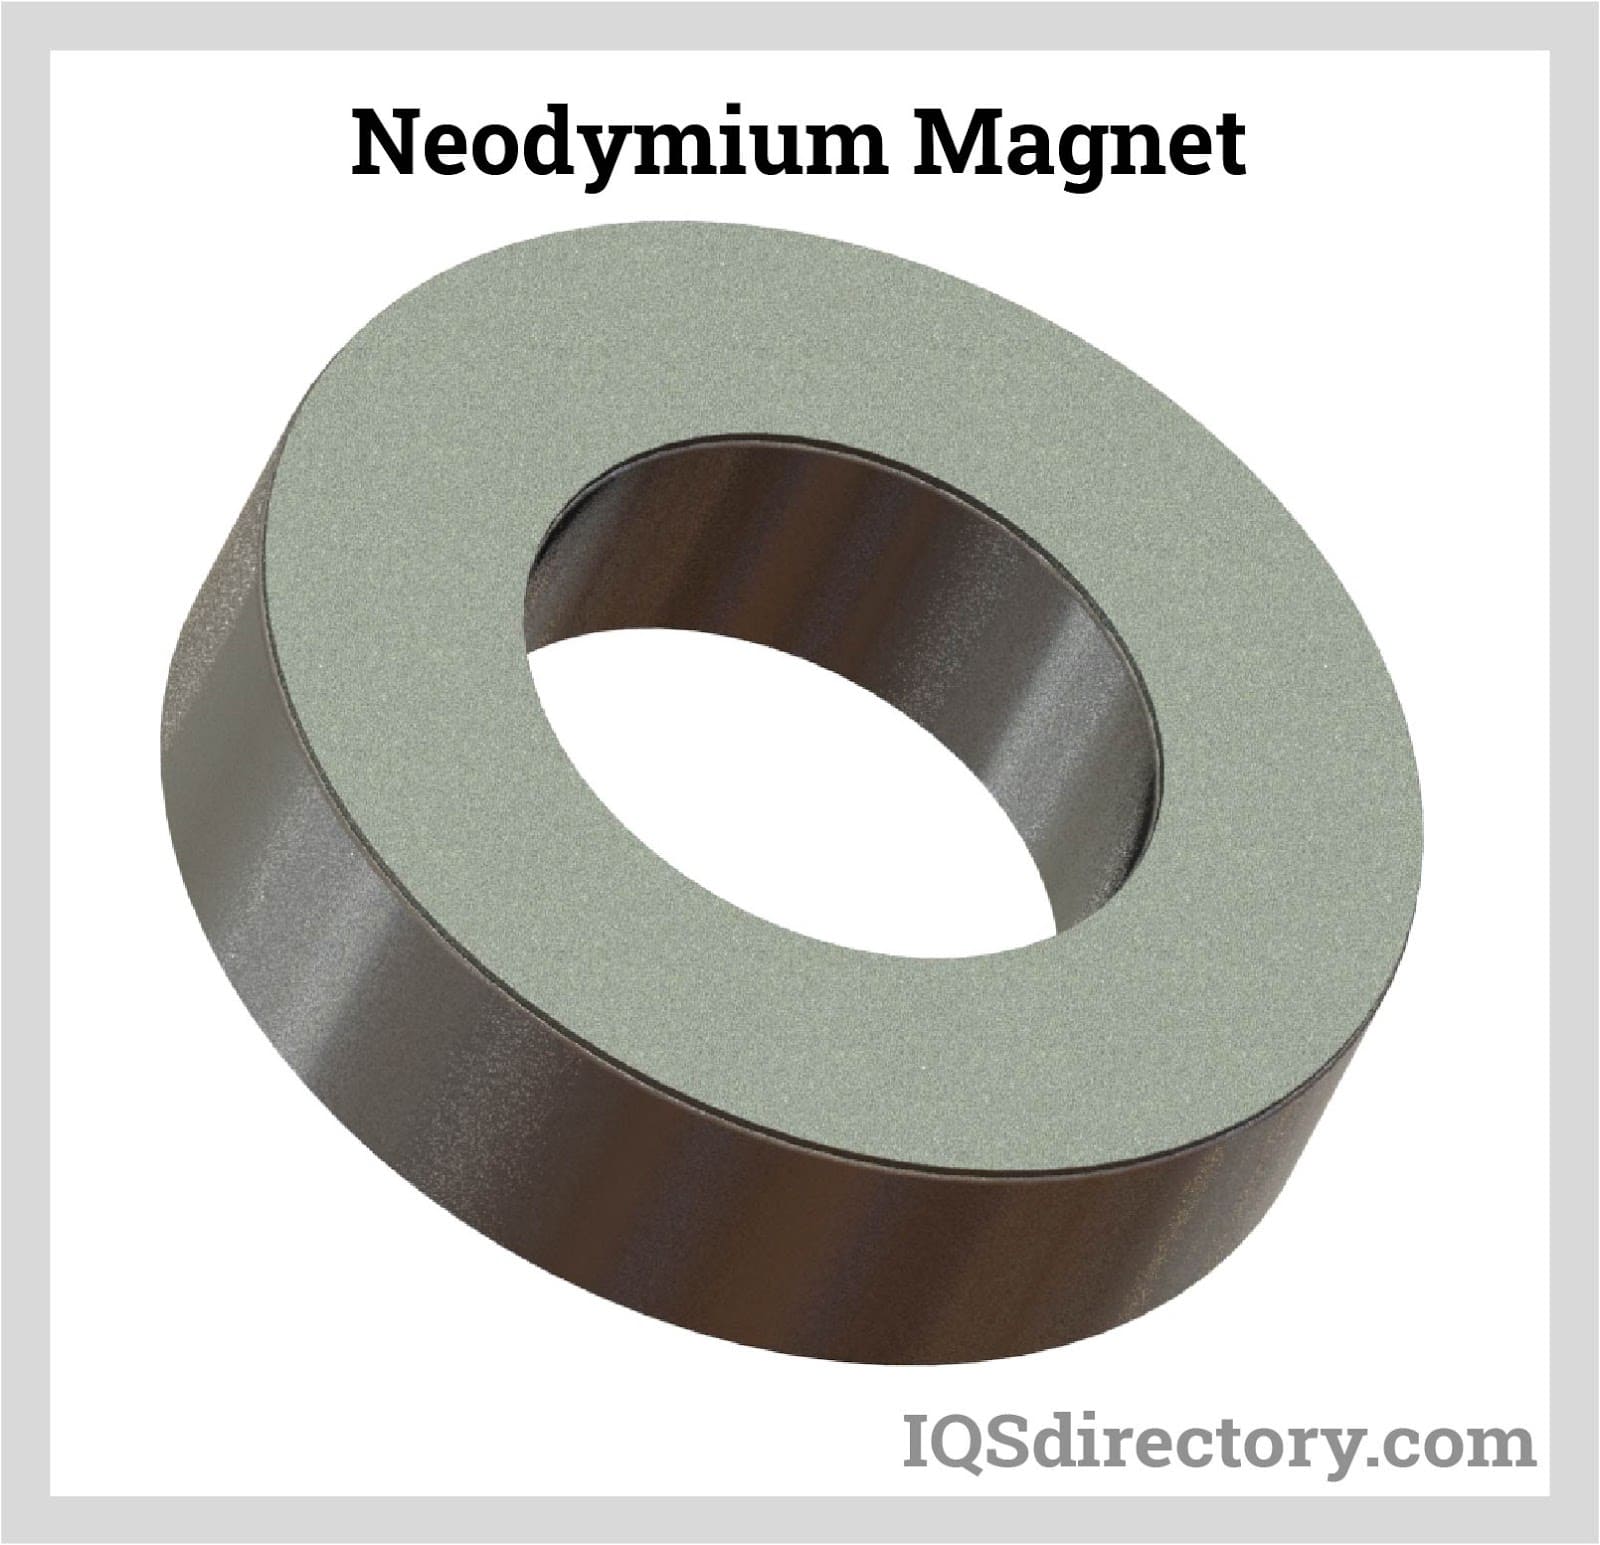 https://www.iqsdirectory.com/articles/magnet/neodymium-magnet/neodymium-magnet.jpg